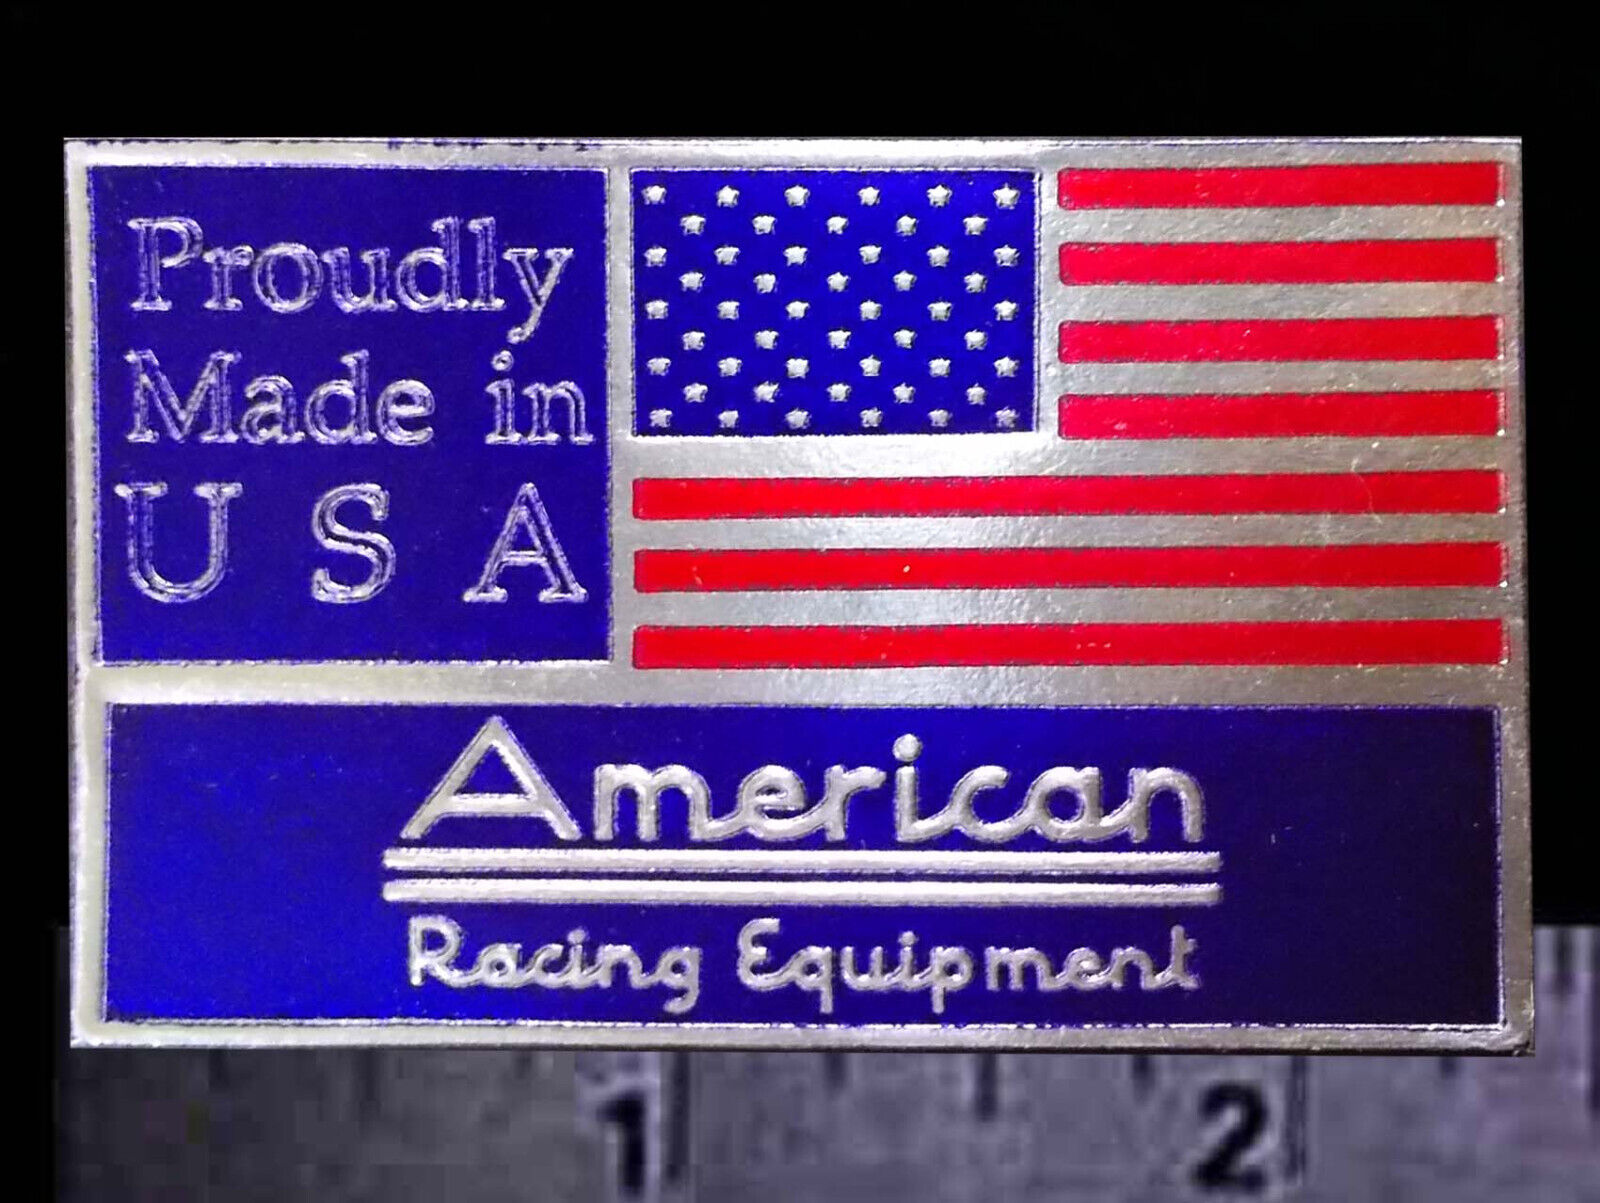 AMERICAN Racing Equipment Made In U.S.A.  Original Vintage Racing Decal/Sticker